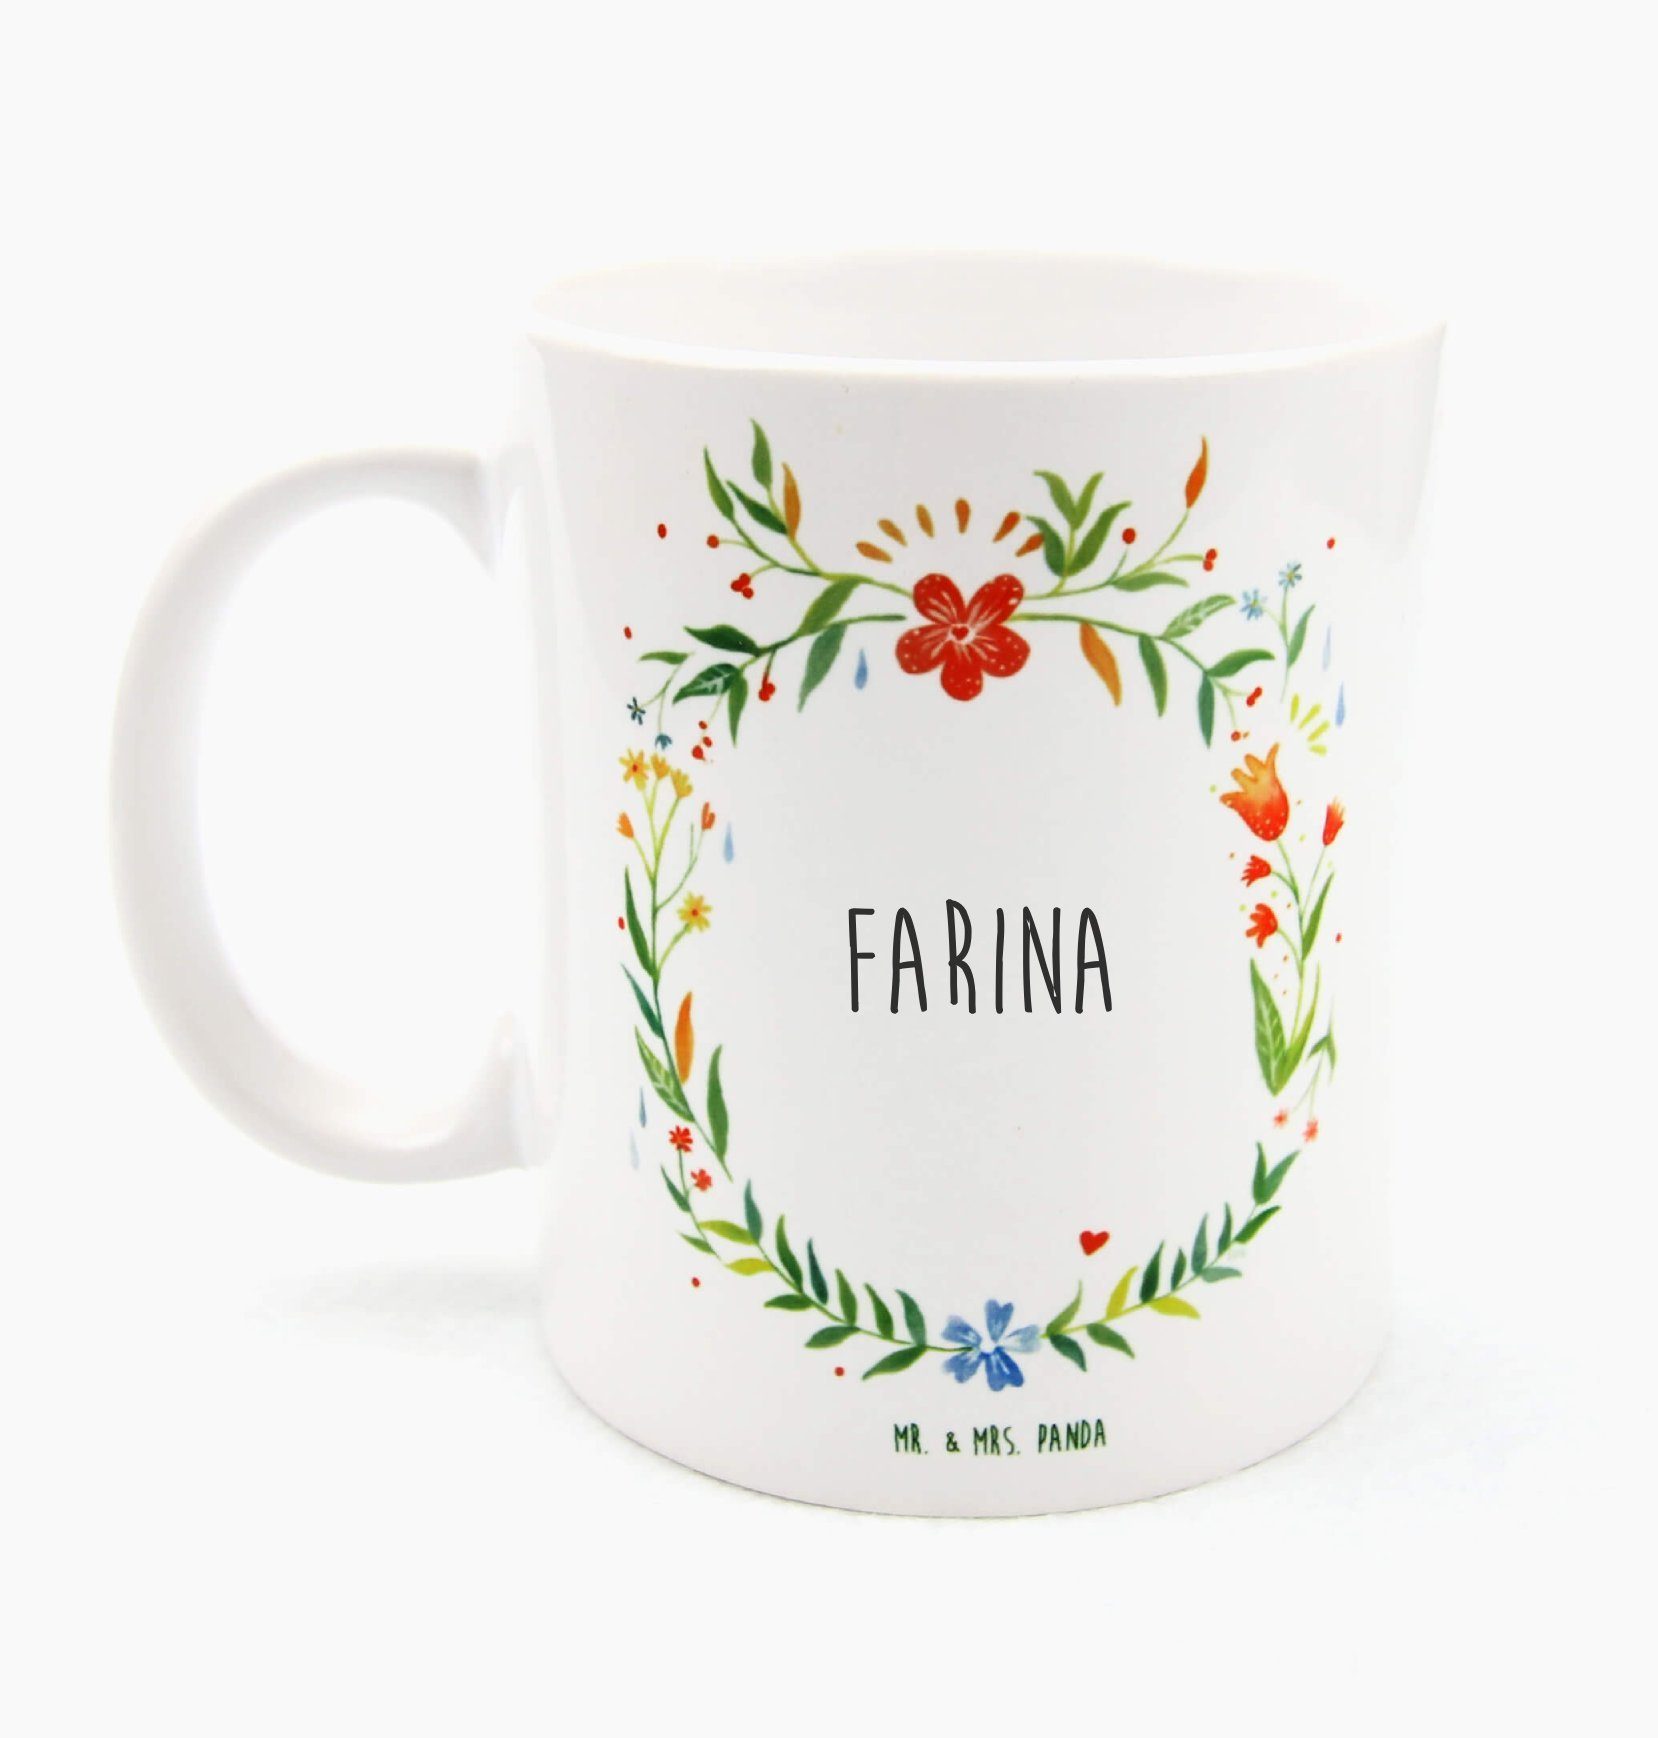 Mr. & Mrs. Panda Tasse Farina - Geschenk, Tasse Motive, Büro Tasse, Teetasse, Geschenk Tasse, Keramik